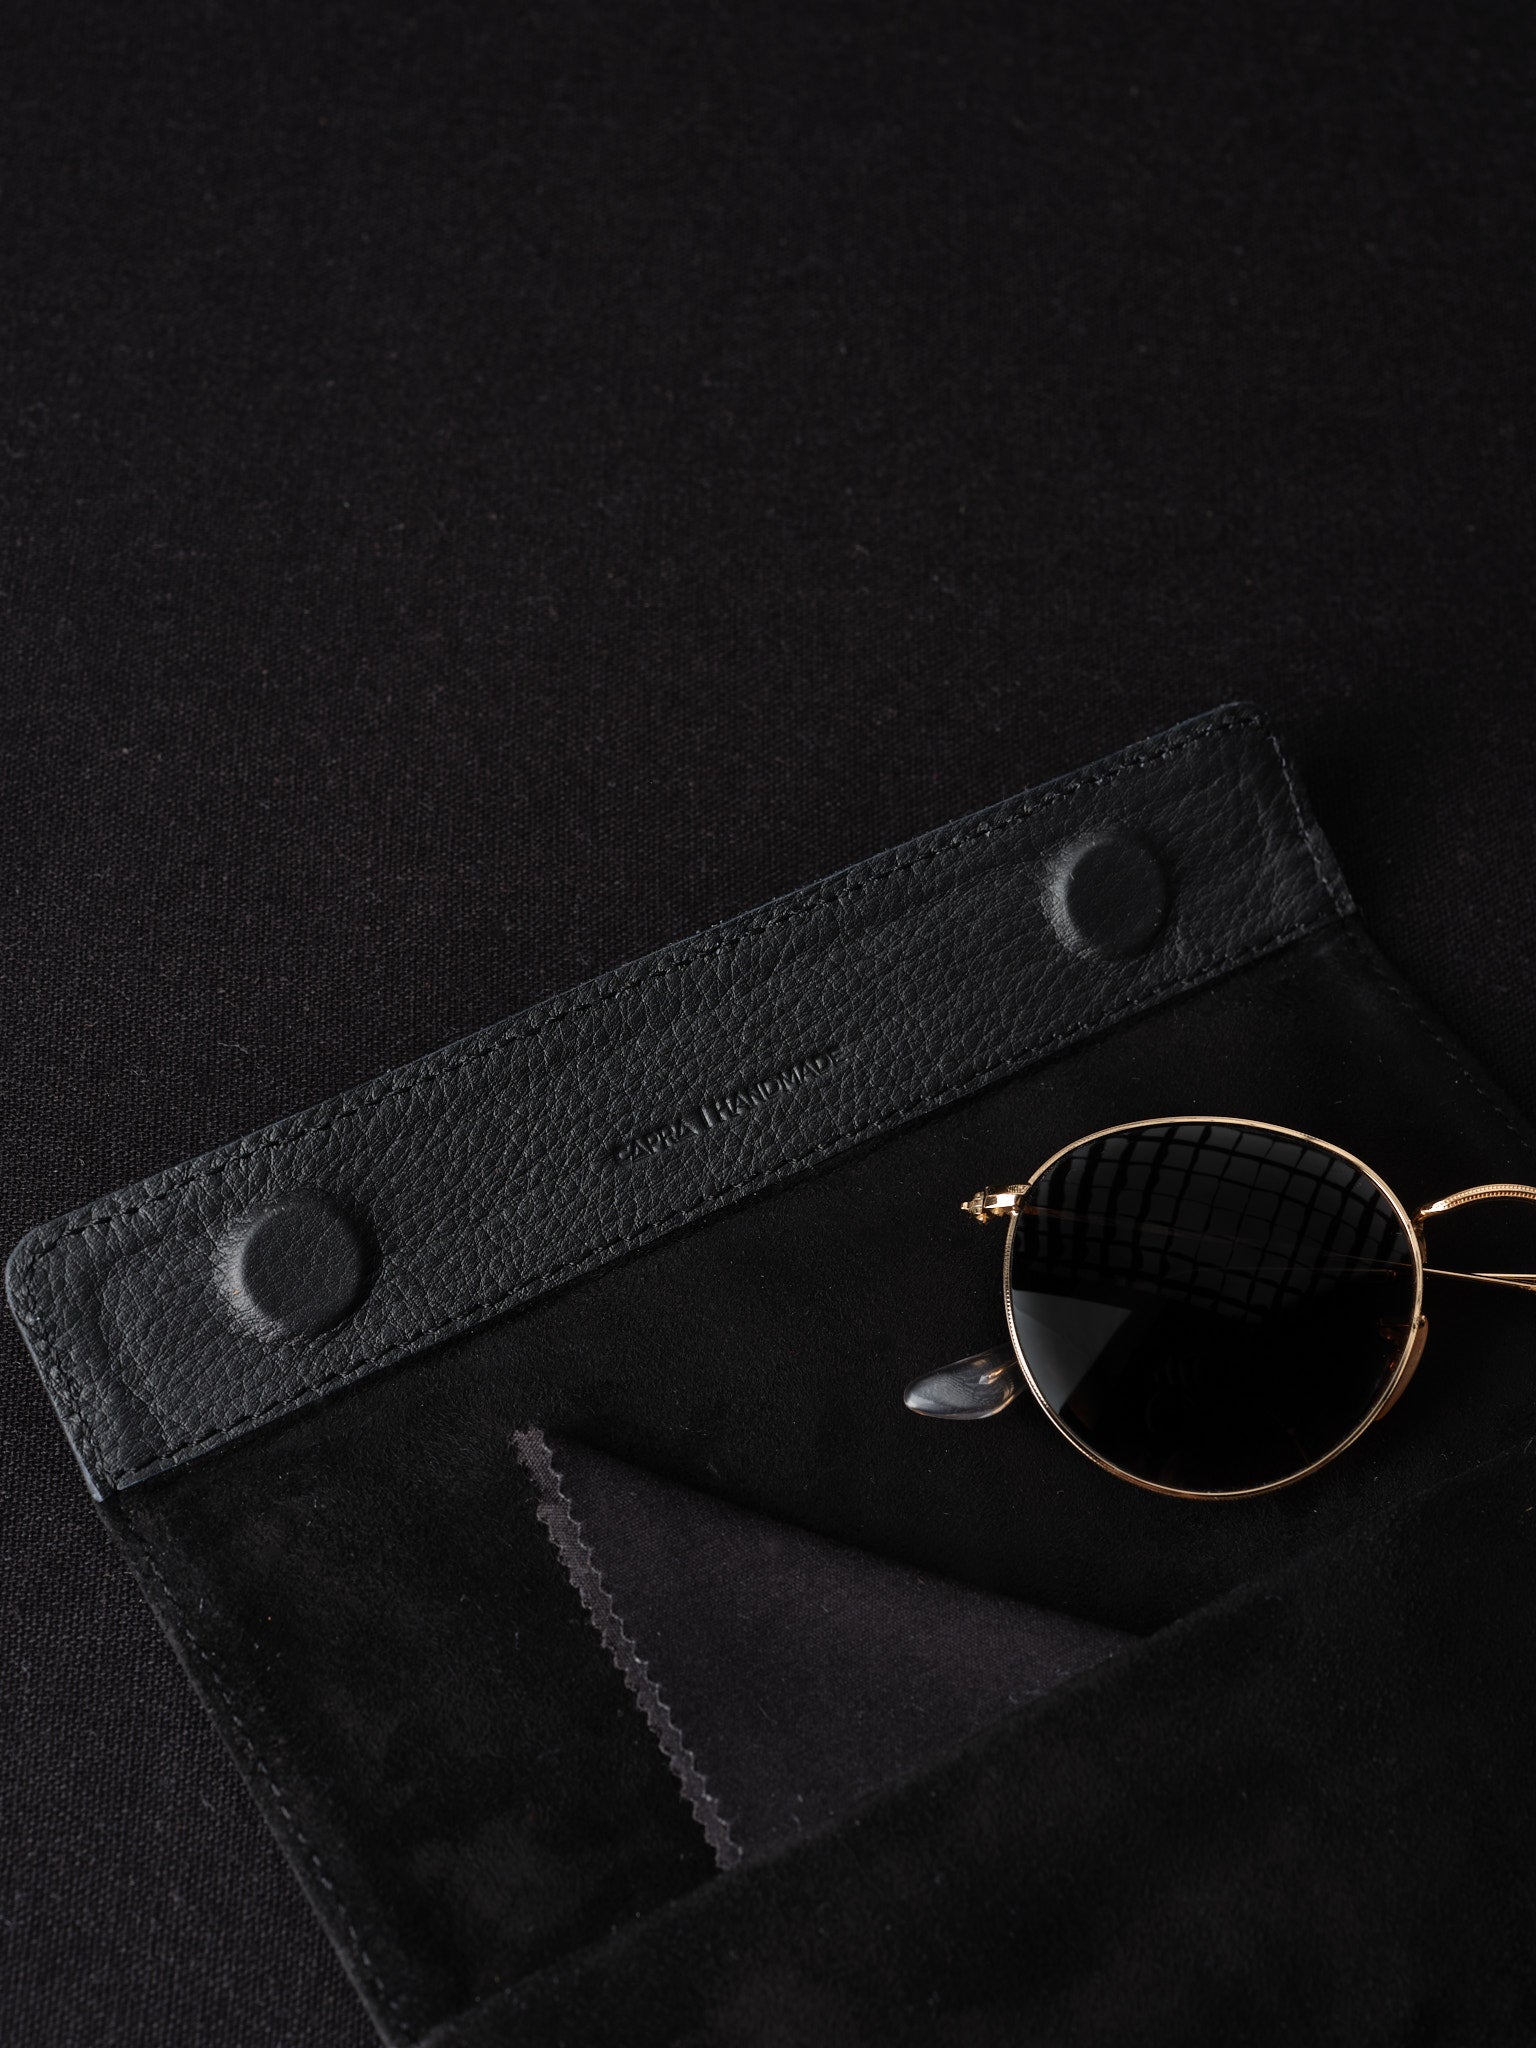 glasses organizer black by Capra Leather